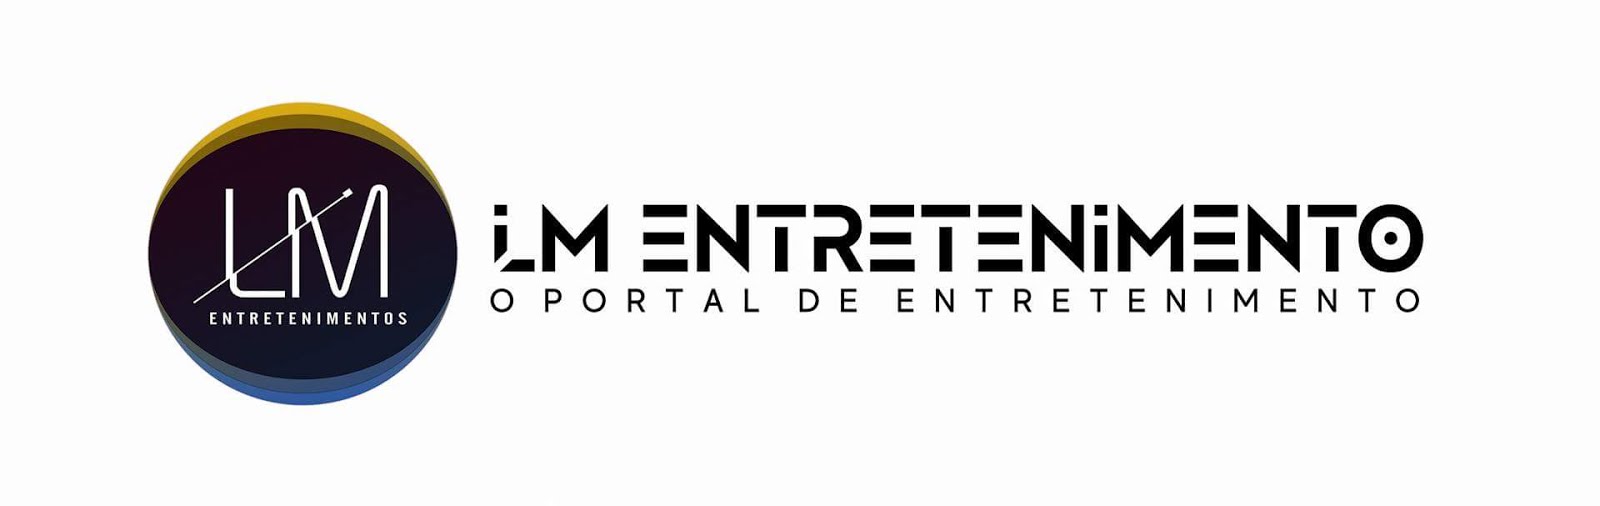 Lm Entretenimento|Portal De Entretenimento